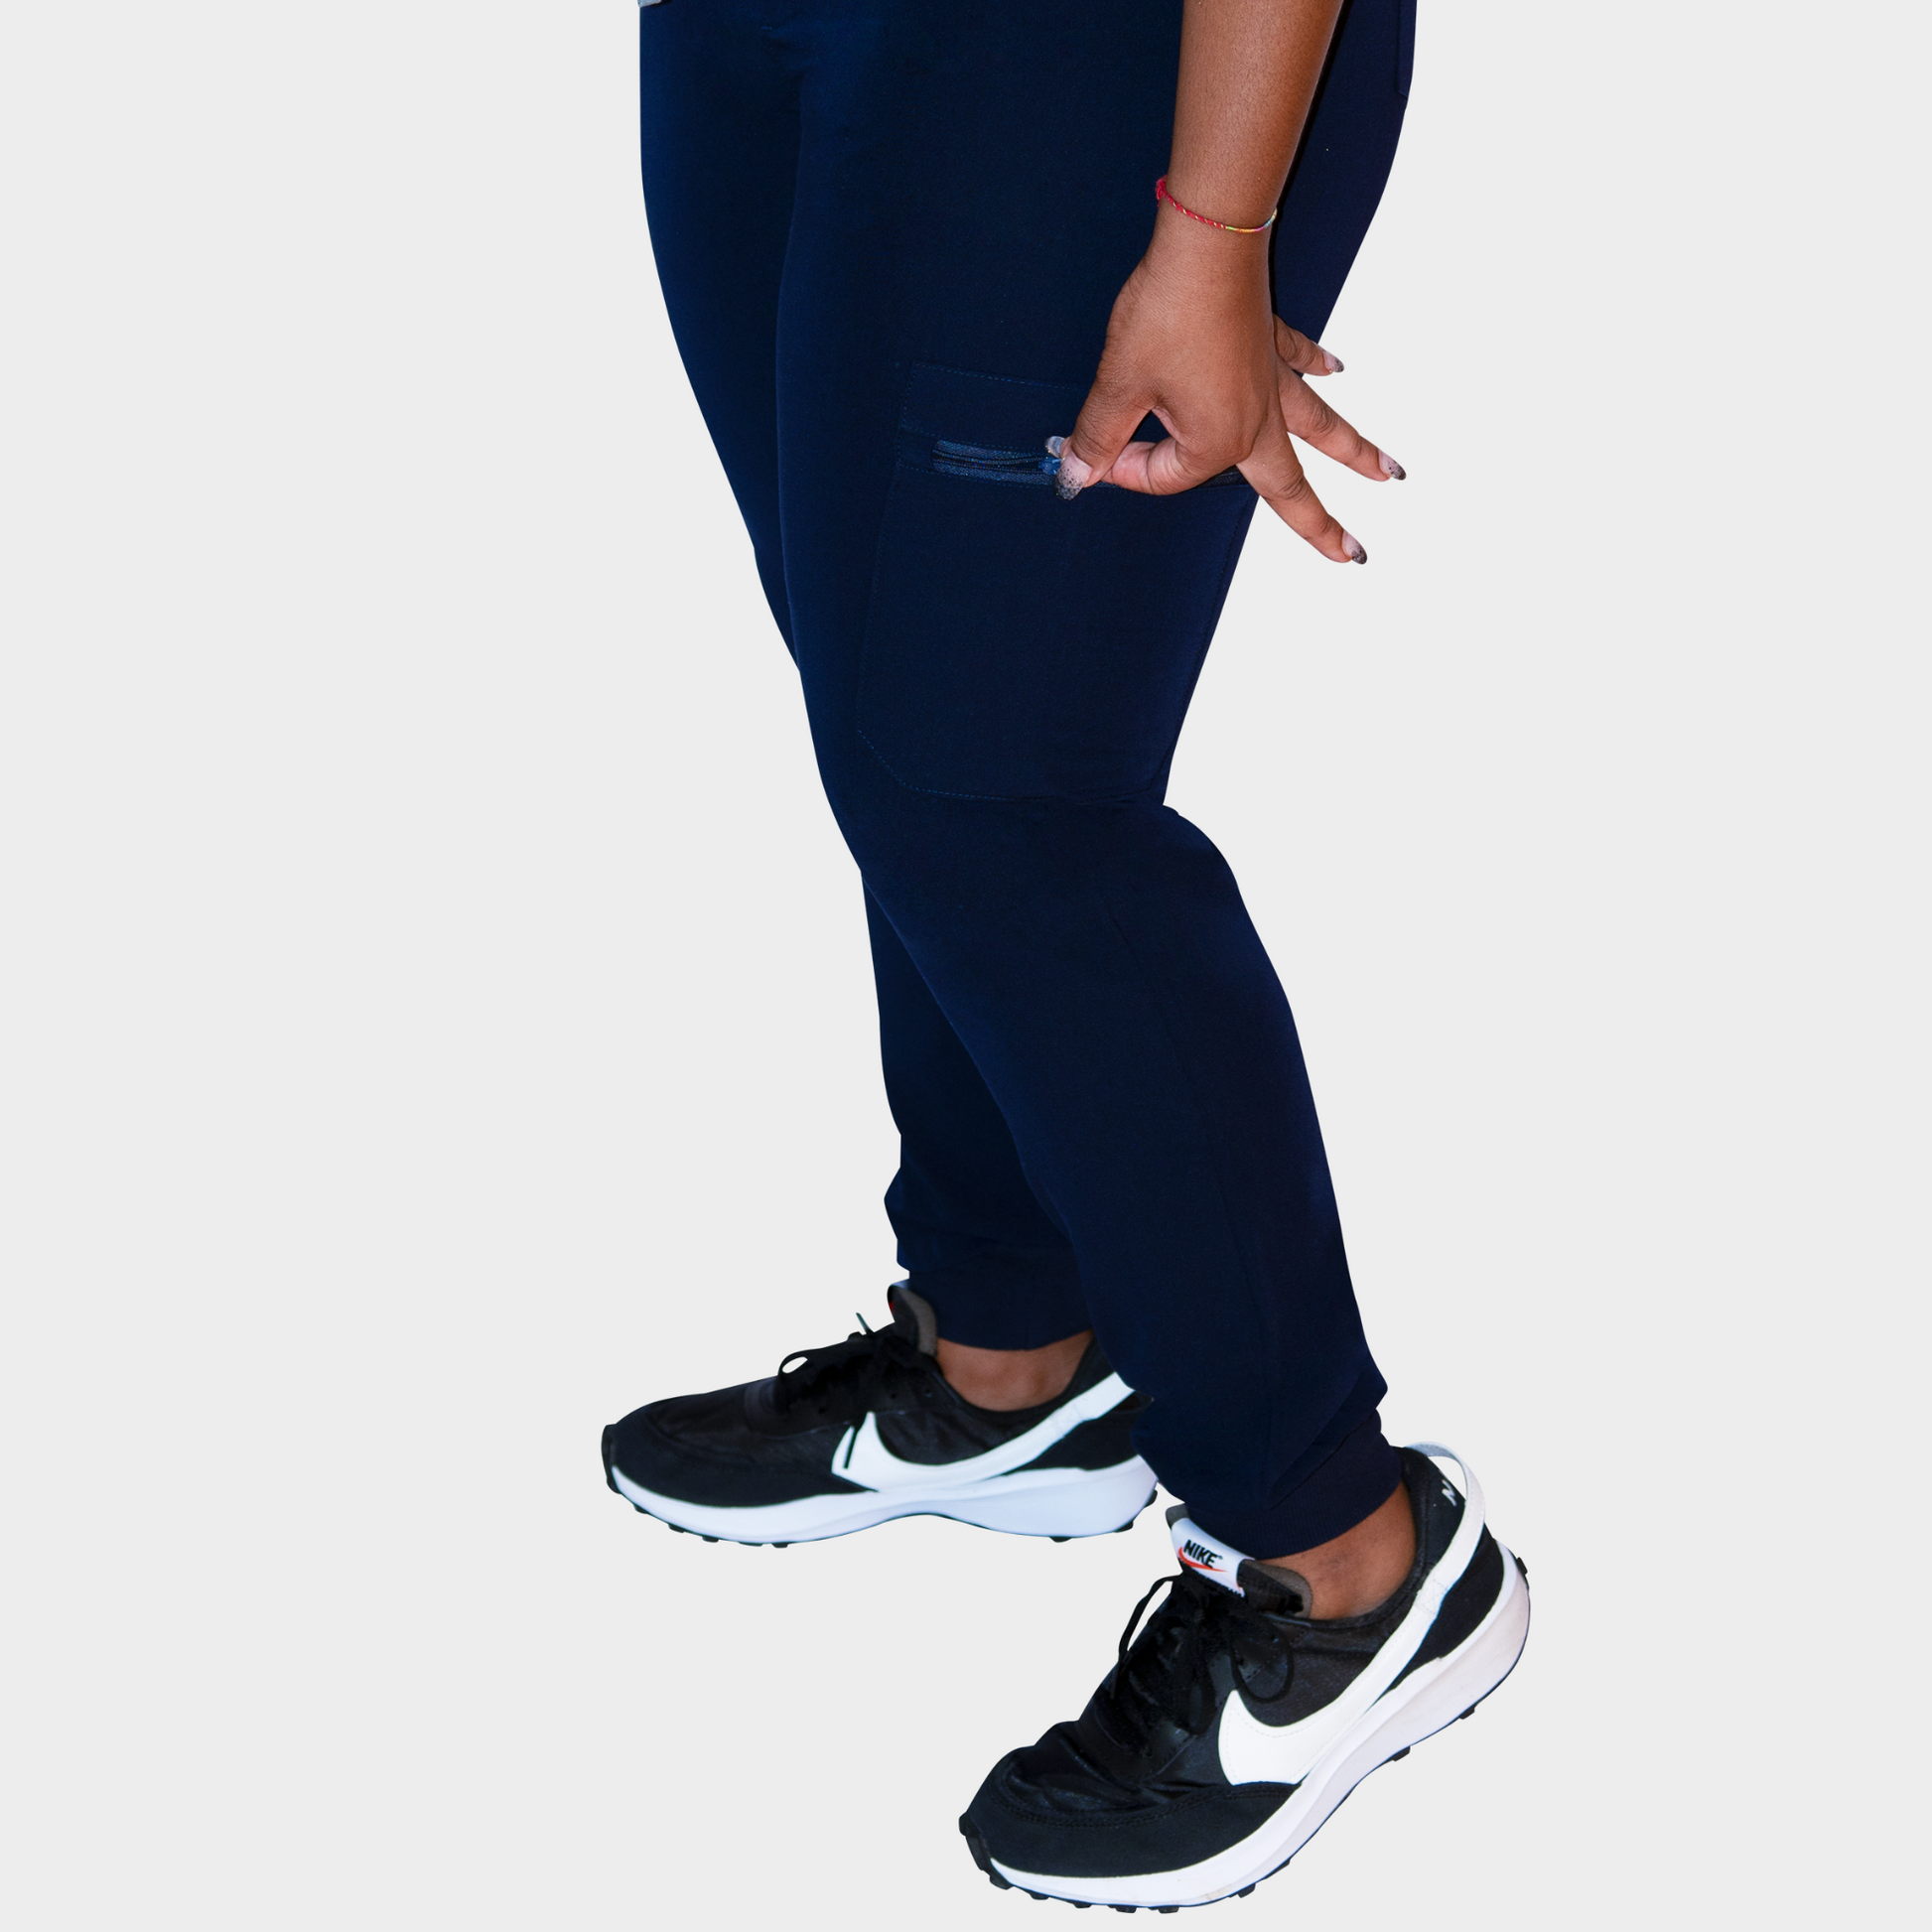 Hera FlexComfort - Kasack hoch-geschnittene Jogger – Ambou Hosen